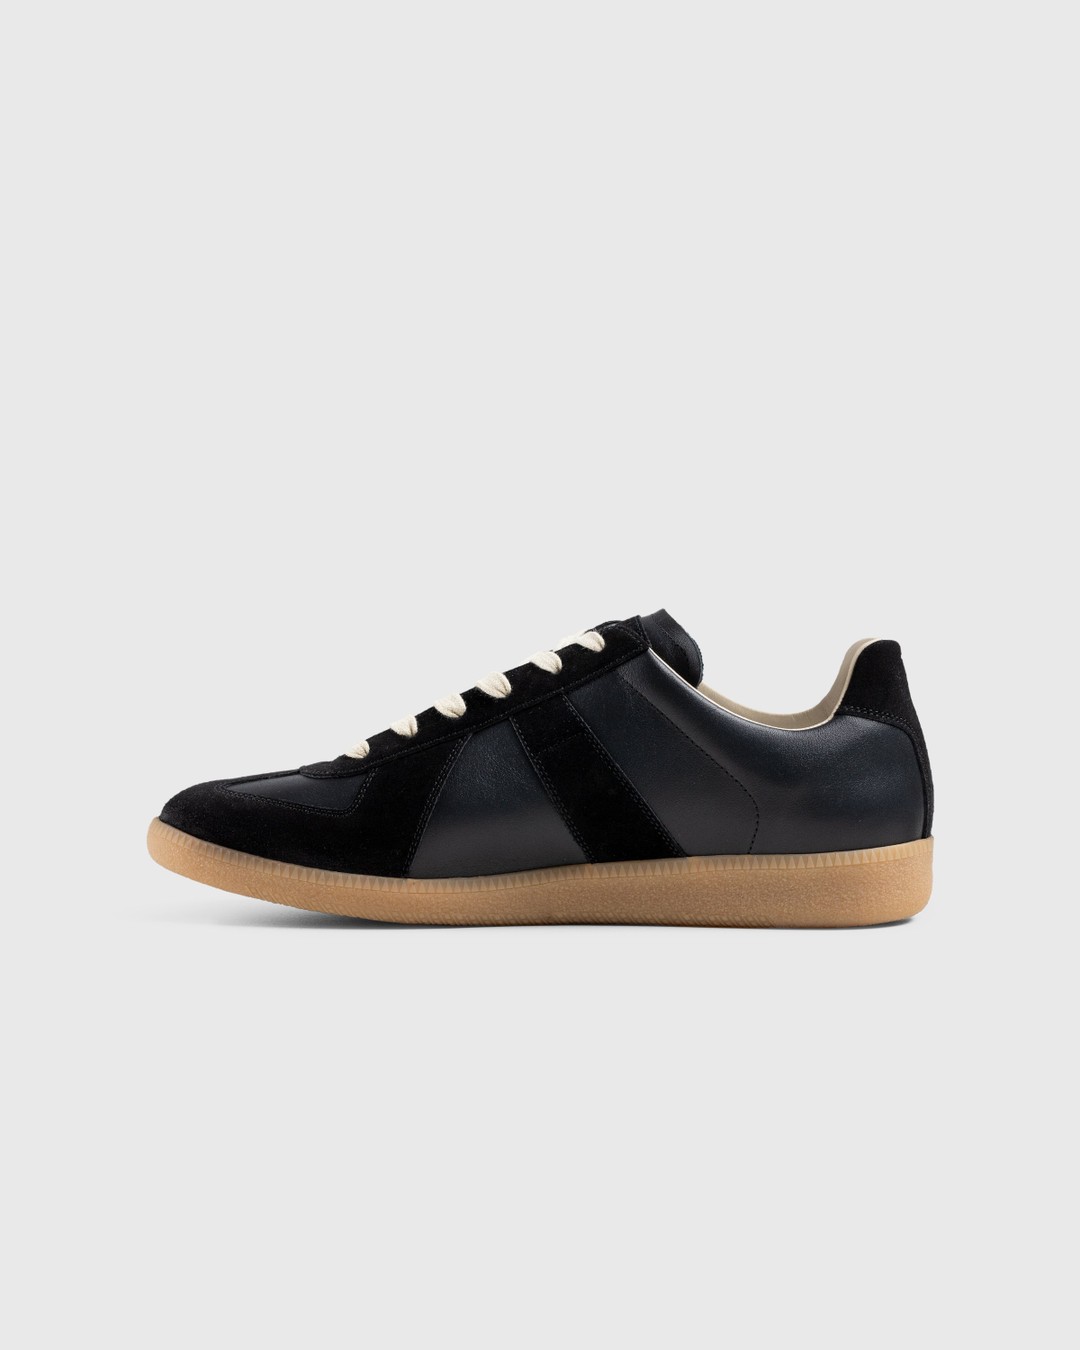 Maison Margiela – Leather Replica Sneakers Black - Sneakers - Black - Image 2